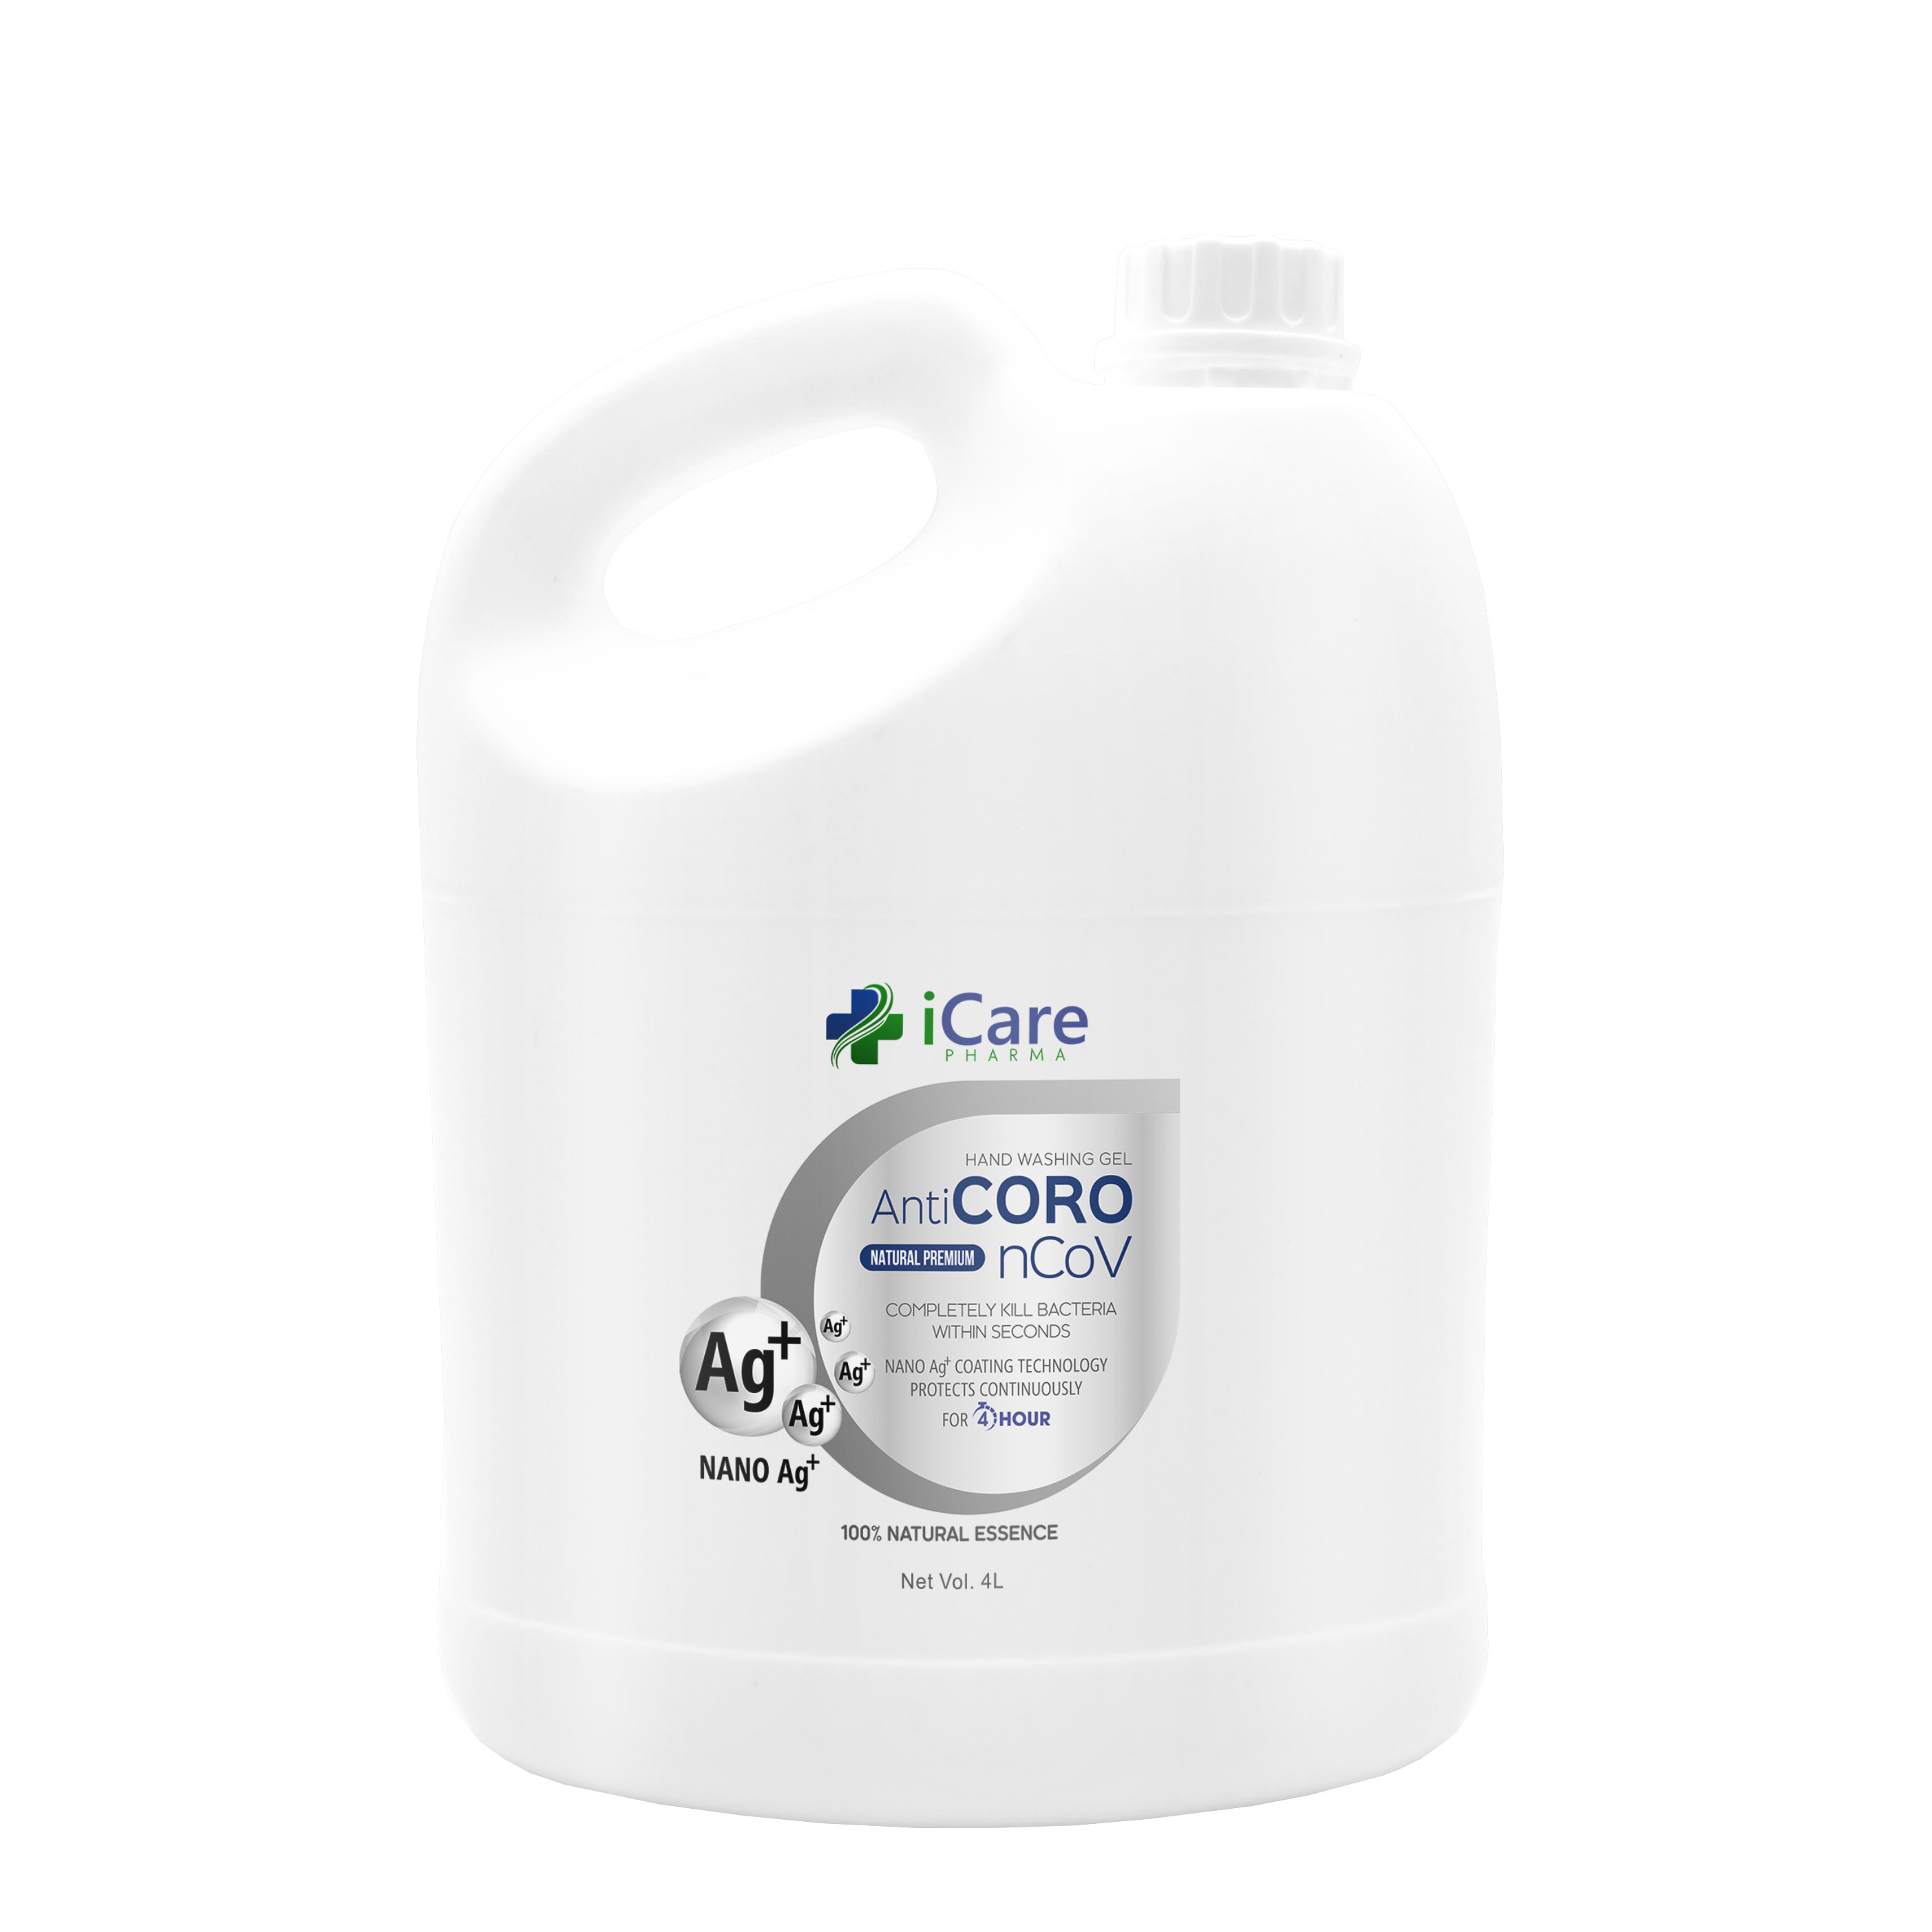 Gel rửa tay khô iCare Pharma - Anti Coro nCoV - Nano Bạc - Chai 4 lít